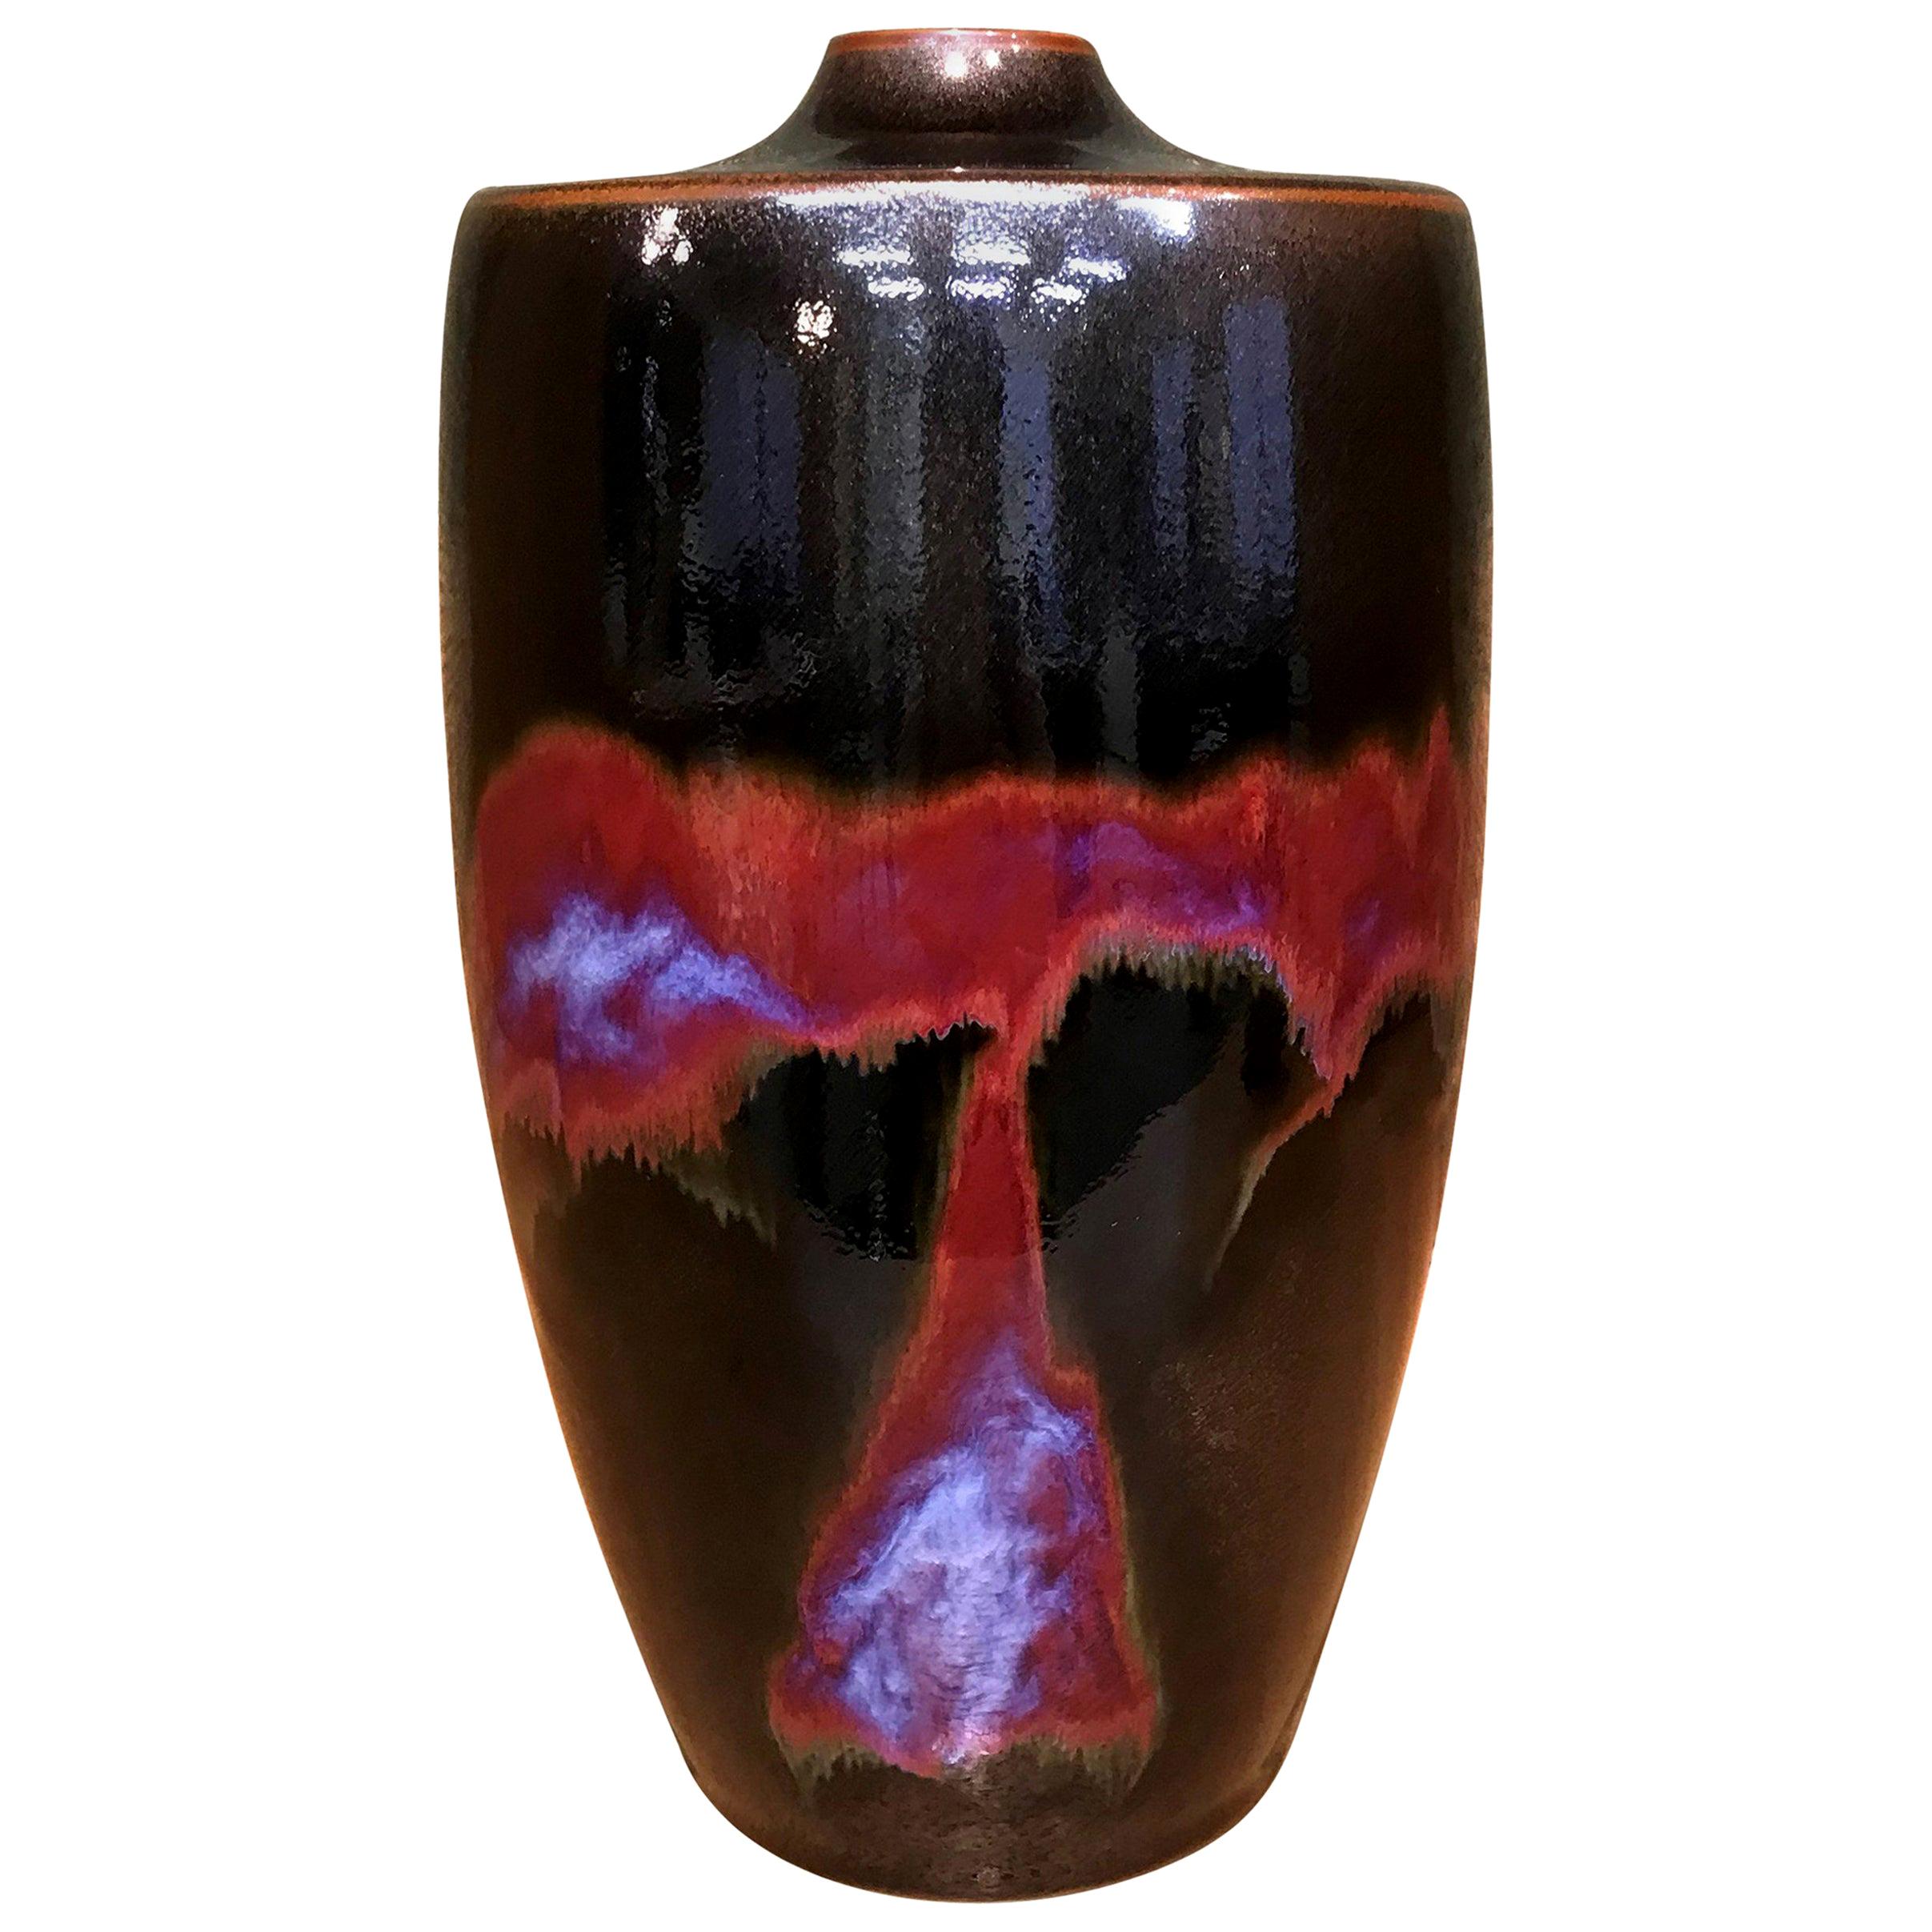 Japanese Contemporary Red Black Hand-Glazed Ceramic Vase by Master Artist